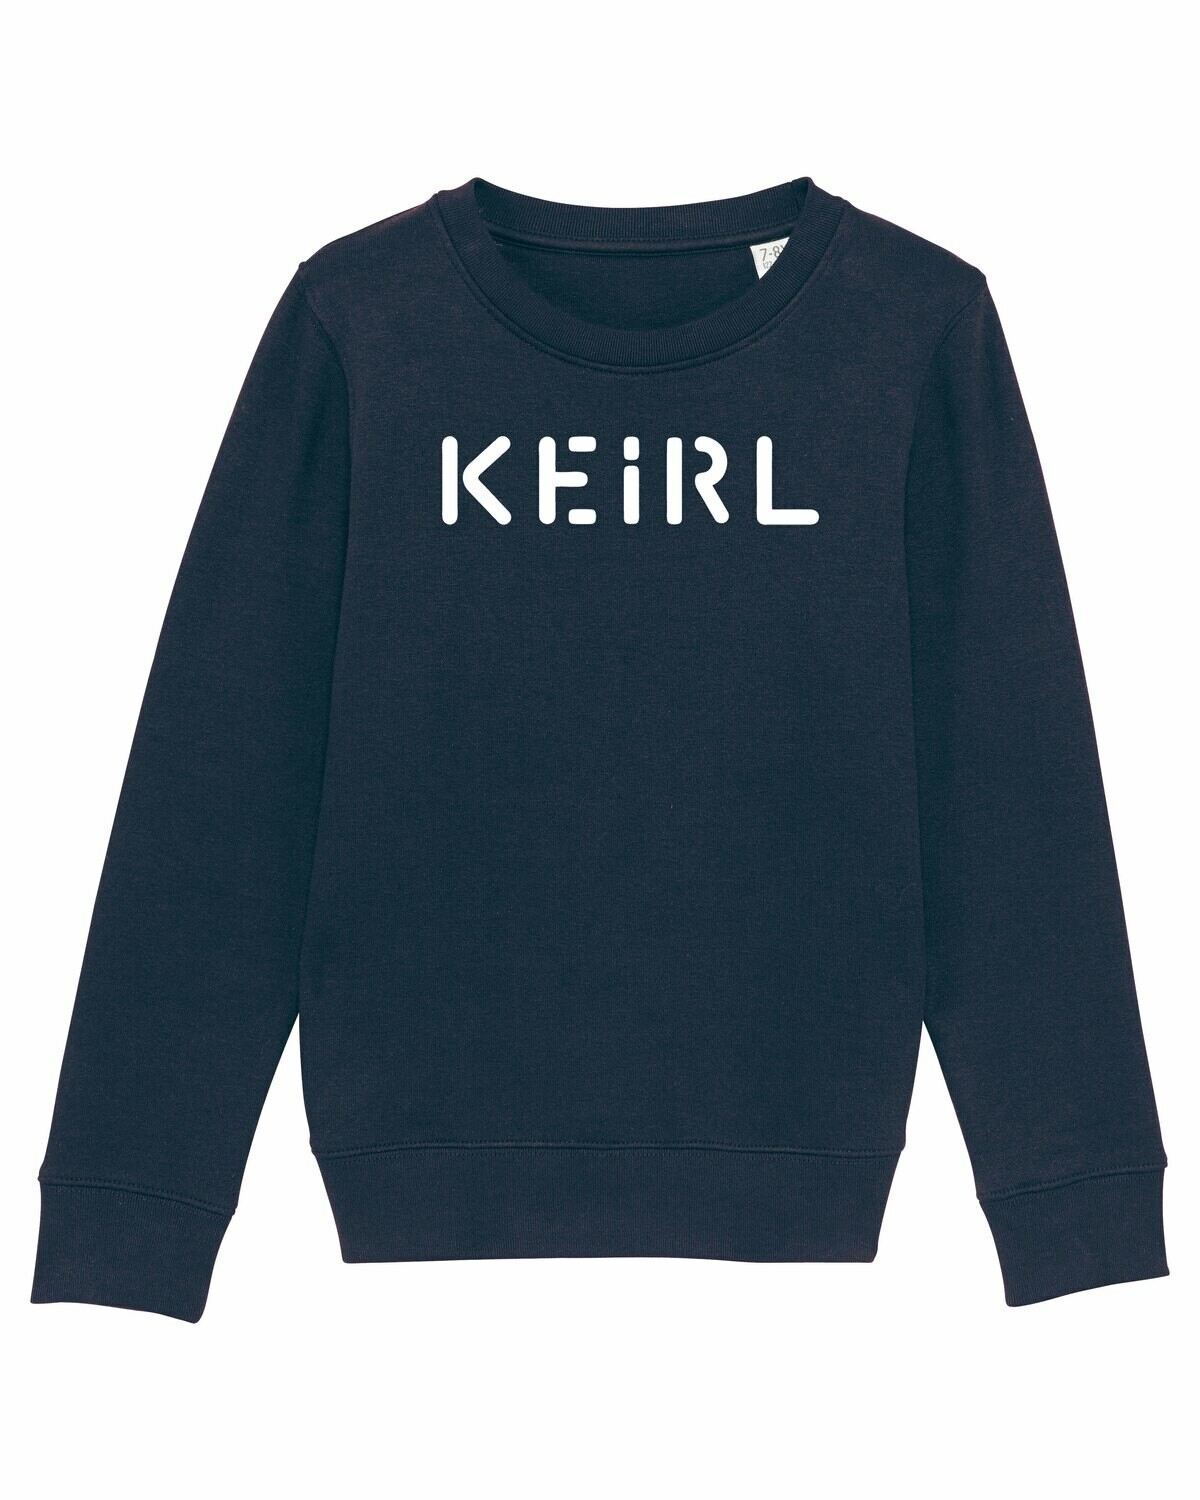 Kids Sweater Keirl